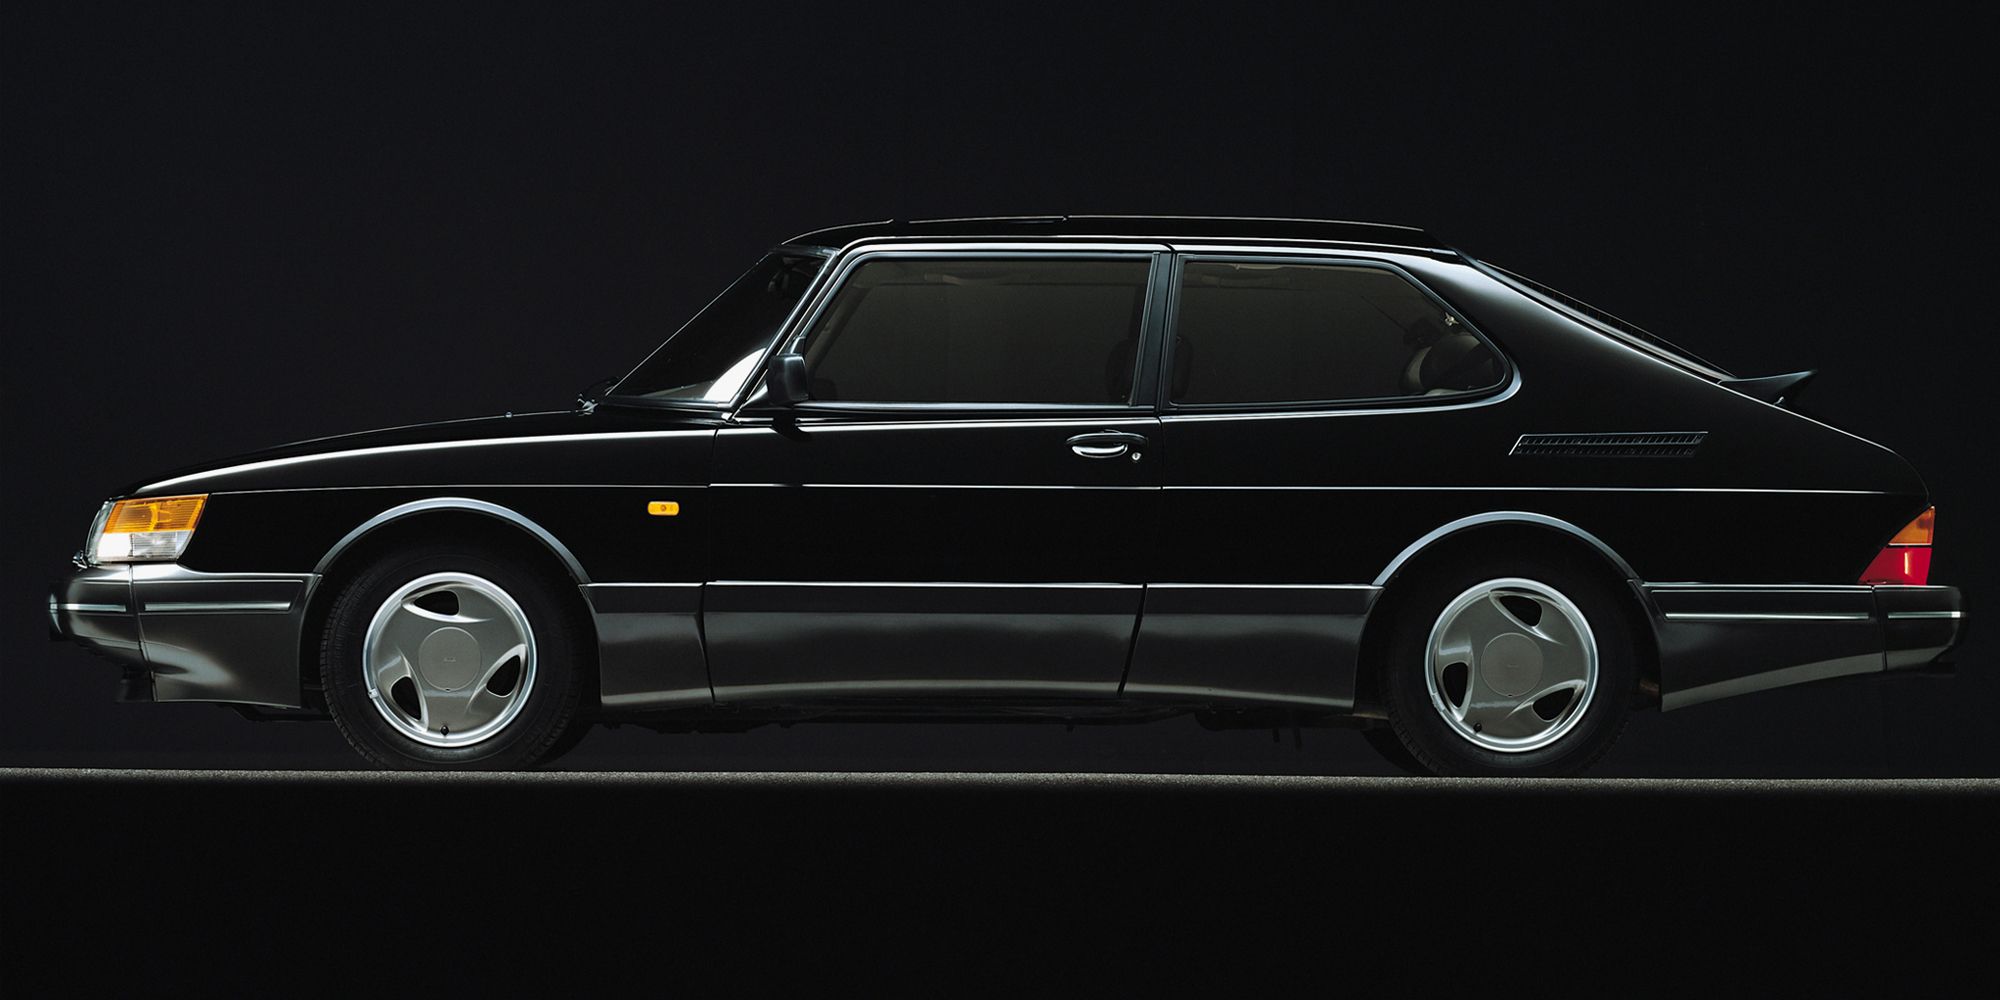 The side profile of the 900 Turbo Commemorative Edition